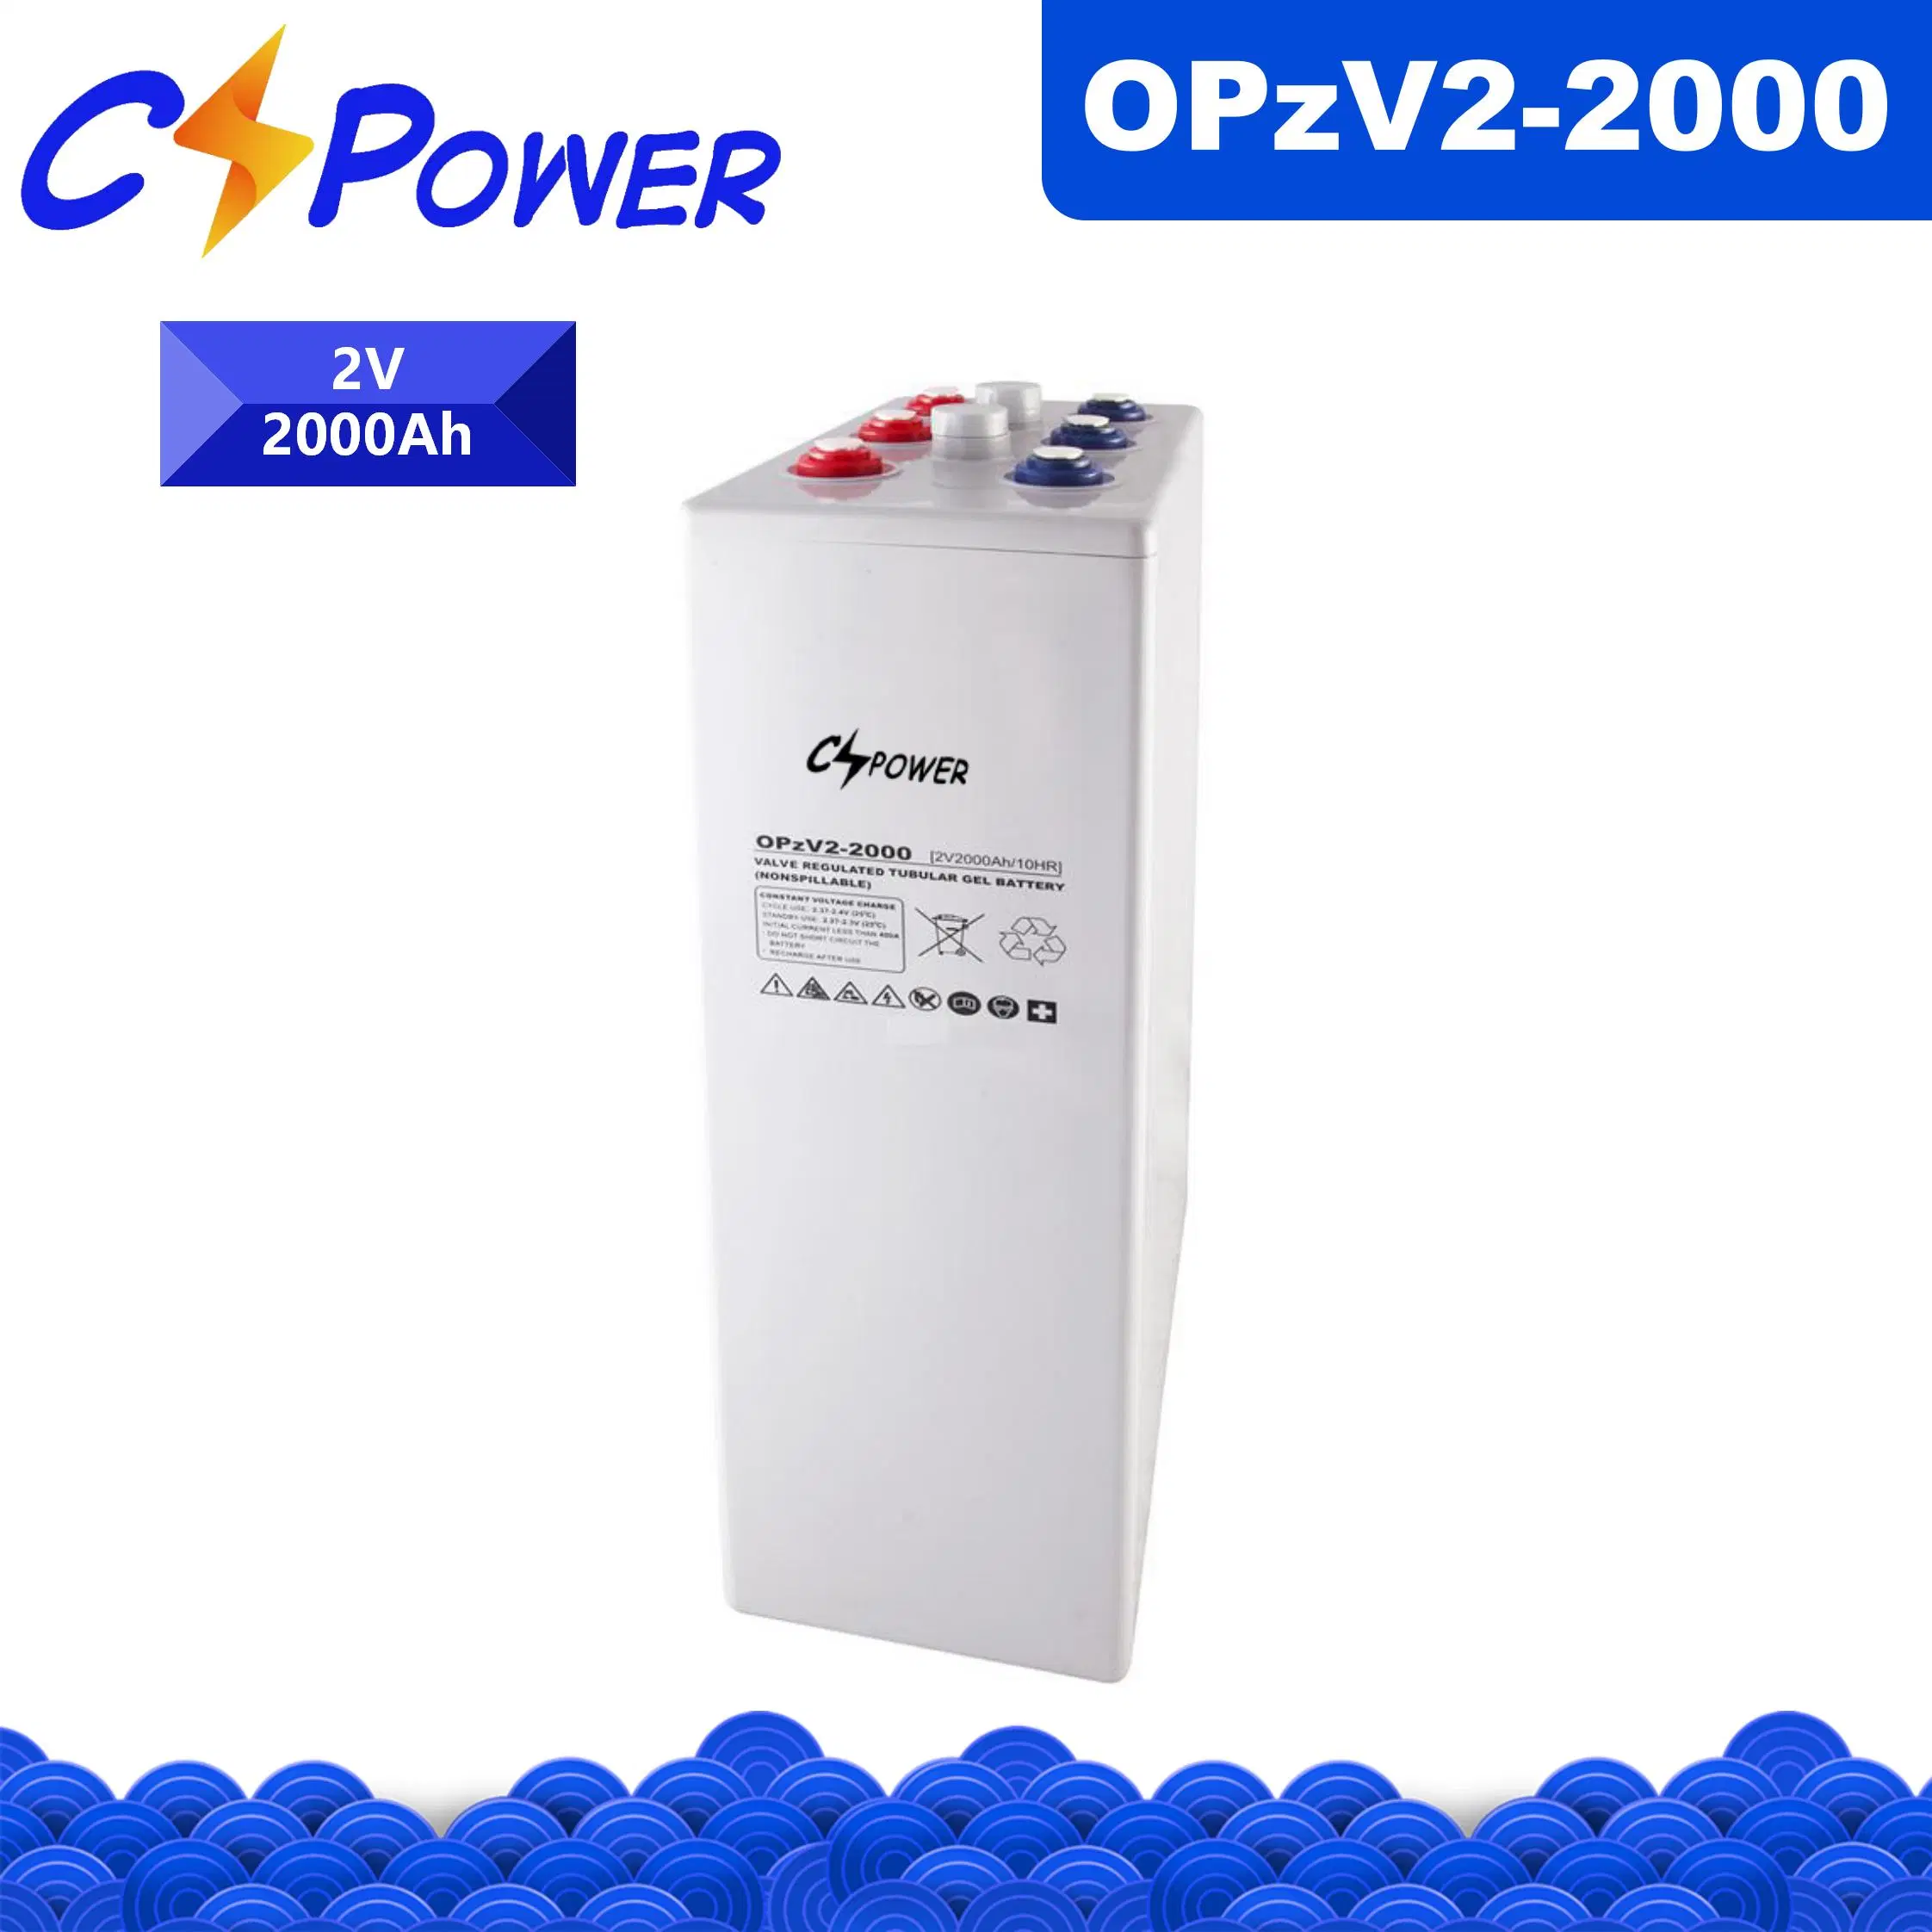 Cspower Opzv-Gel-Tubular-Battery/Opzv-Solar-Power-Battery 2V 2000ah para Telecom/Sistema Solar Power